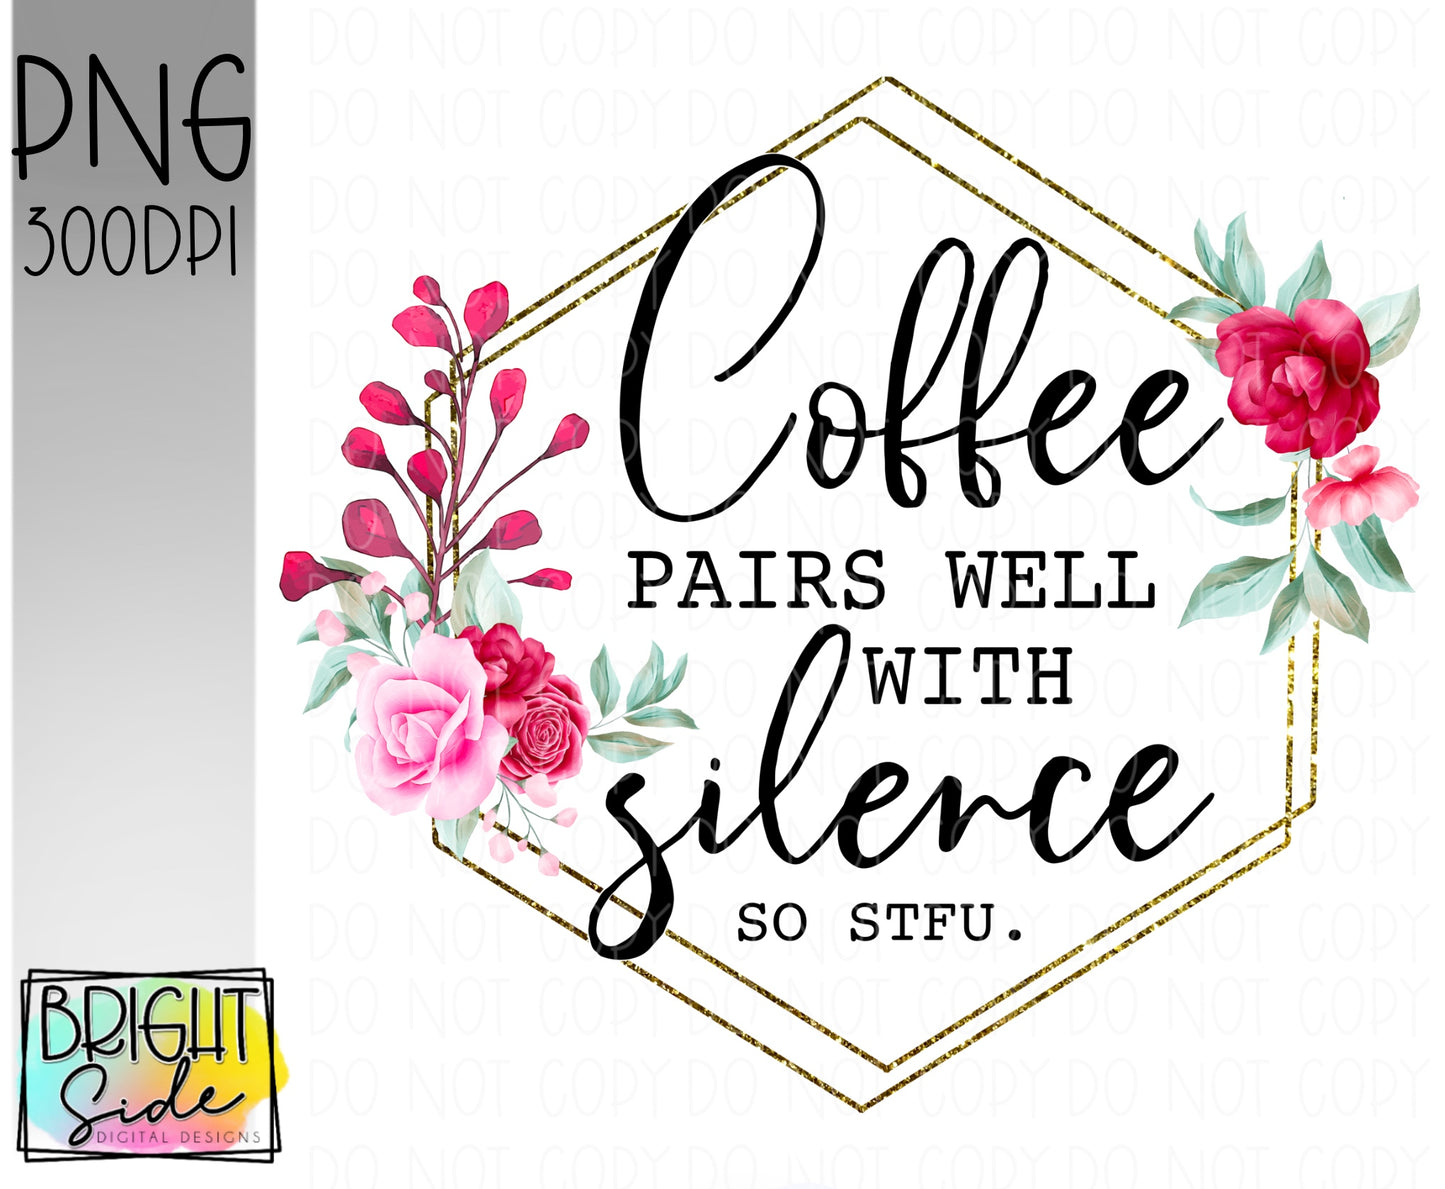 Coffee pairs well with silence so STFU